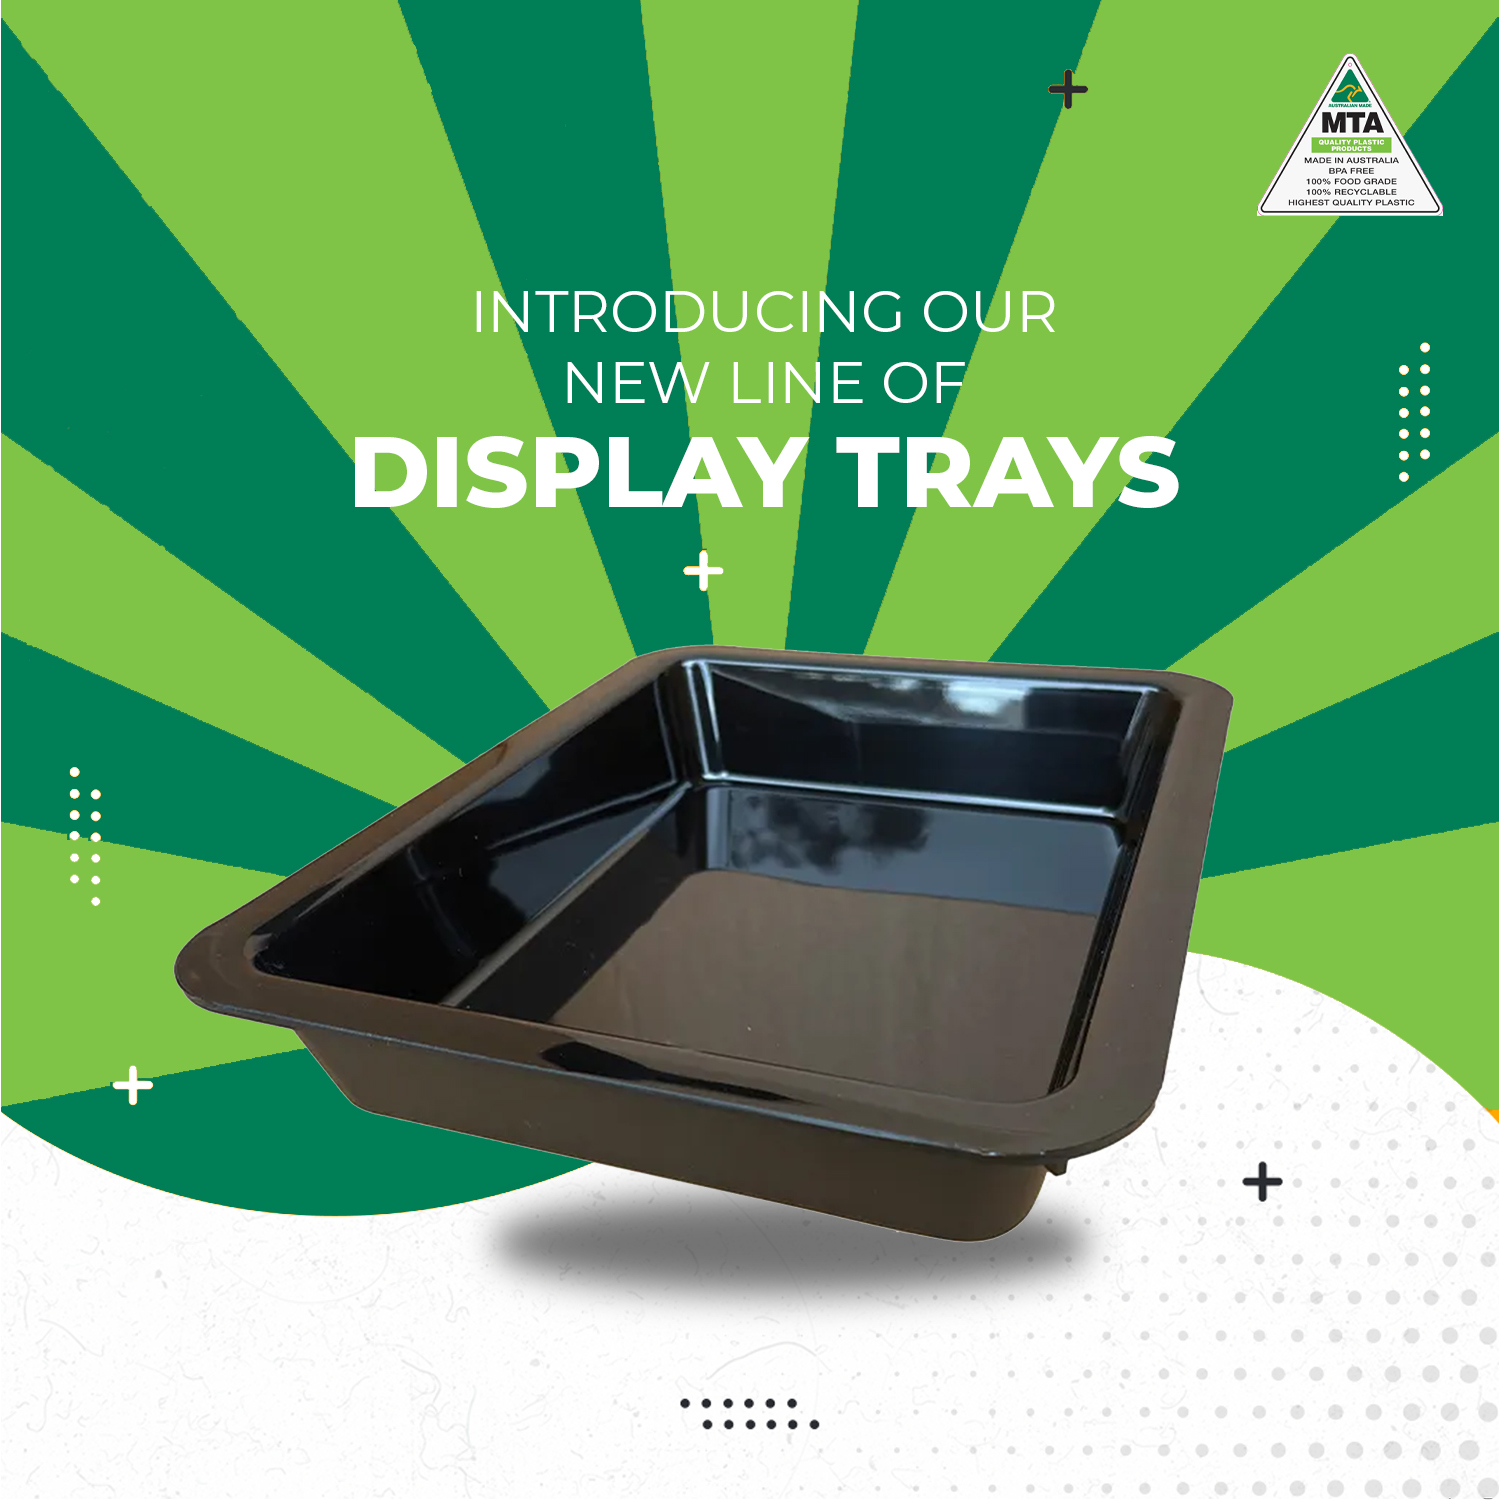 Display trays